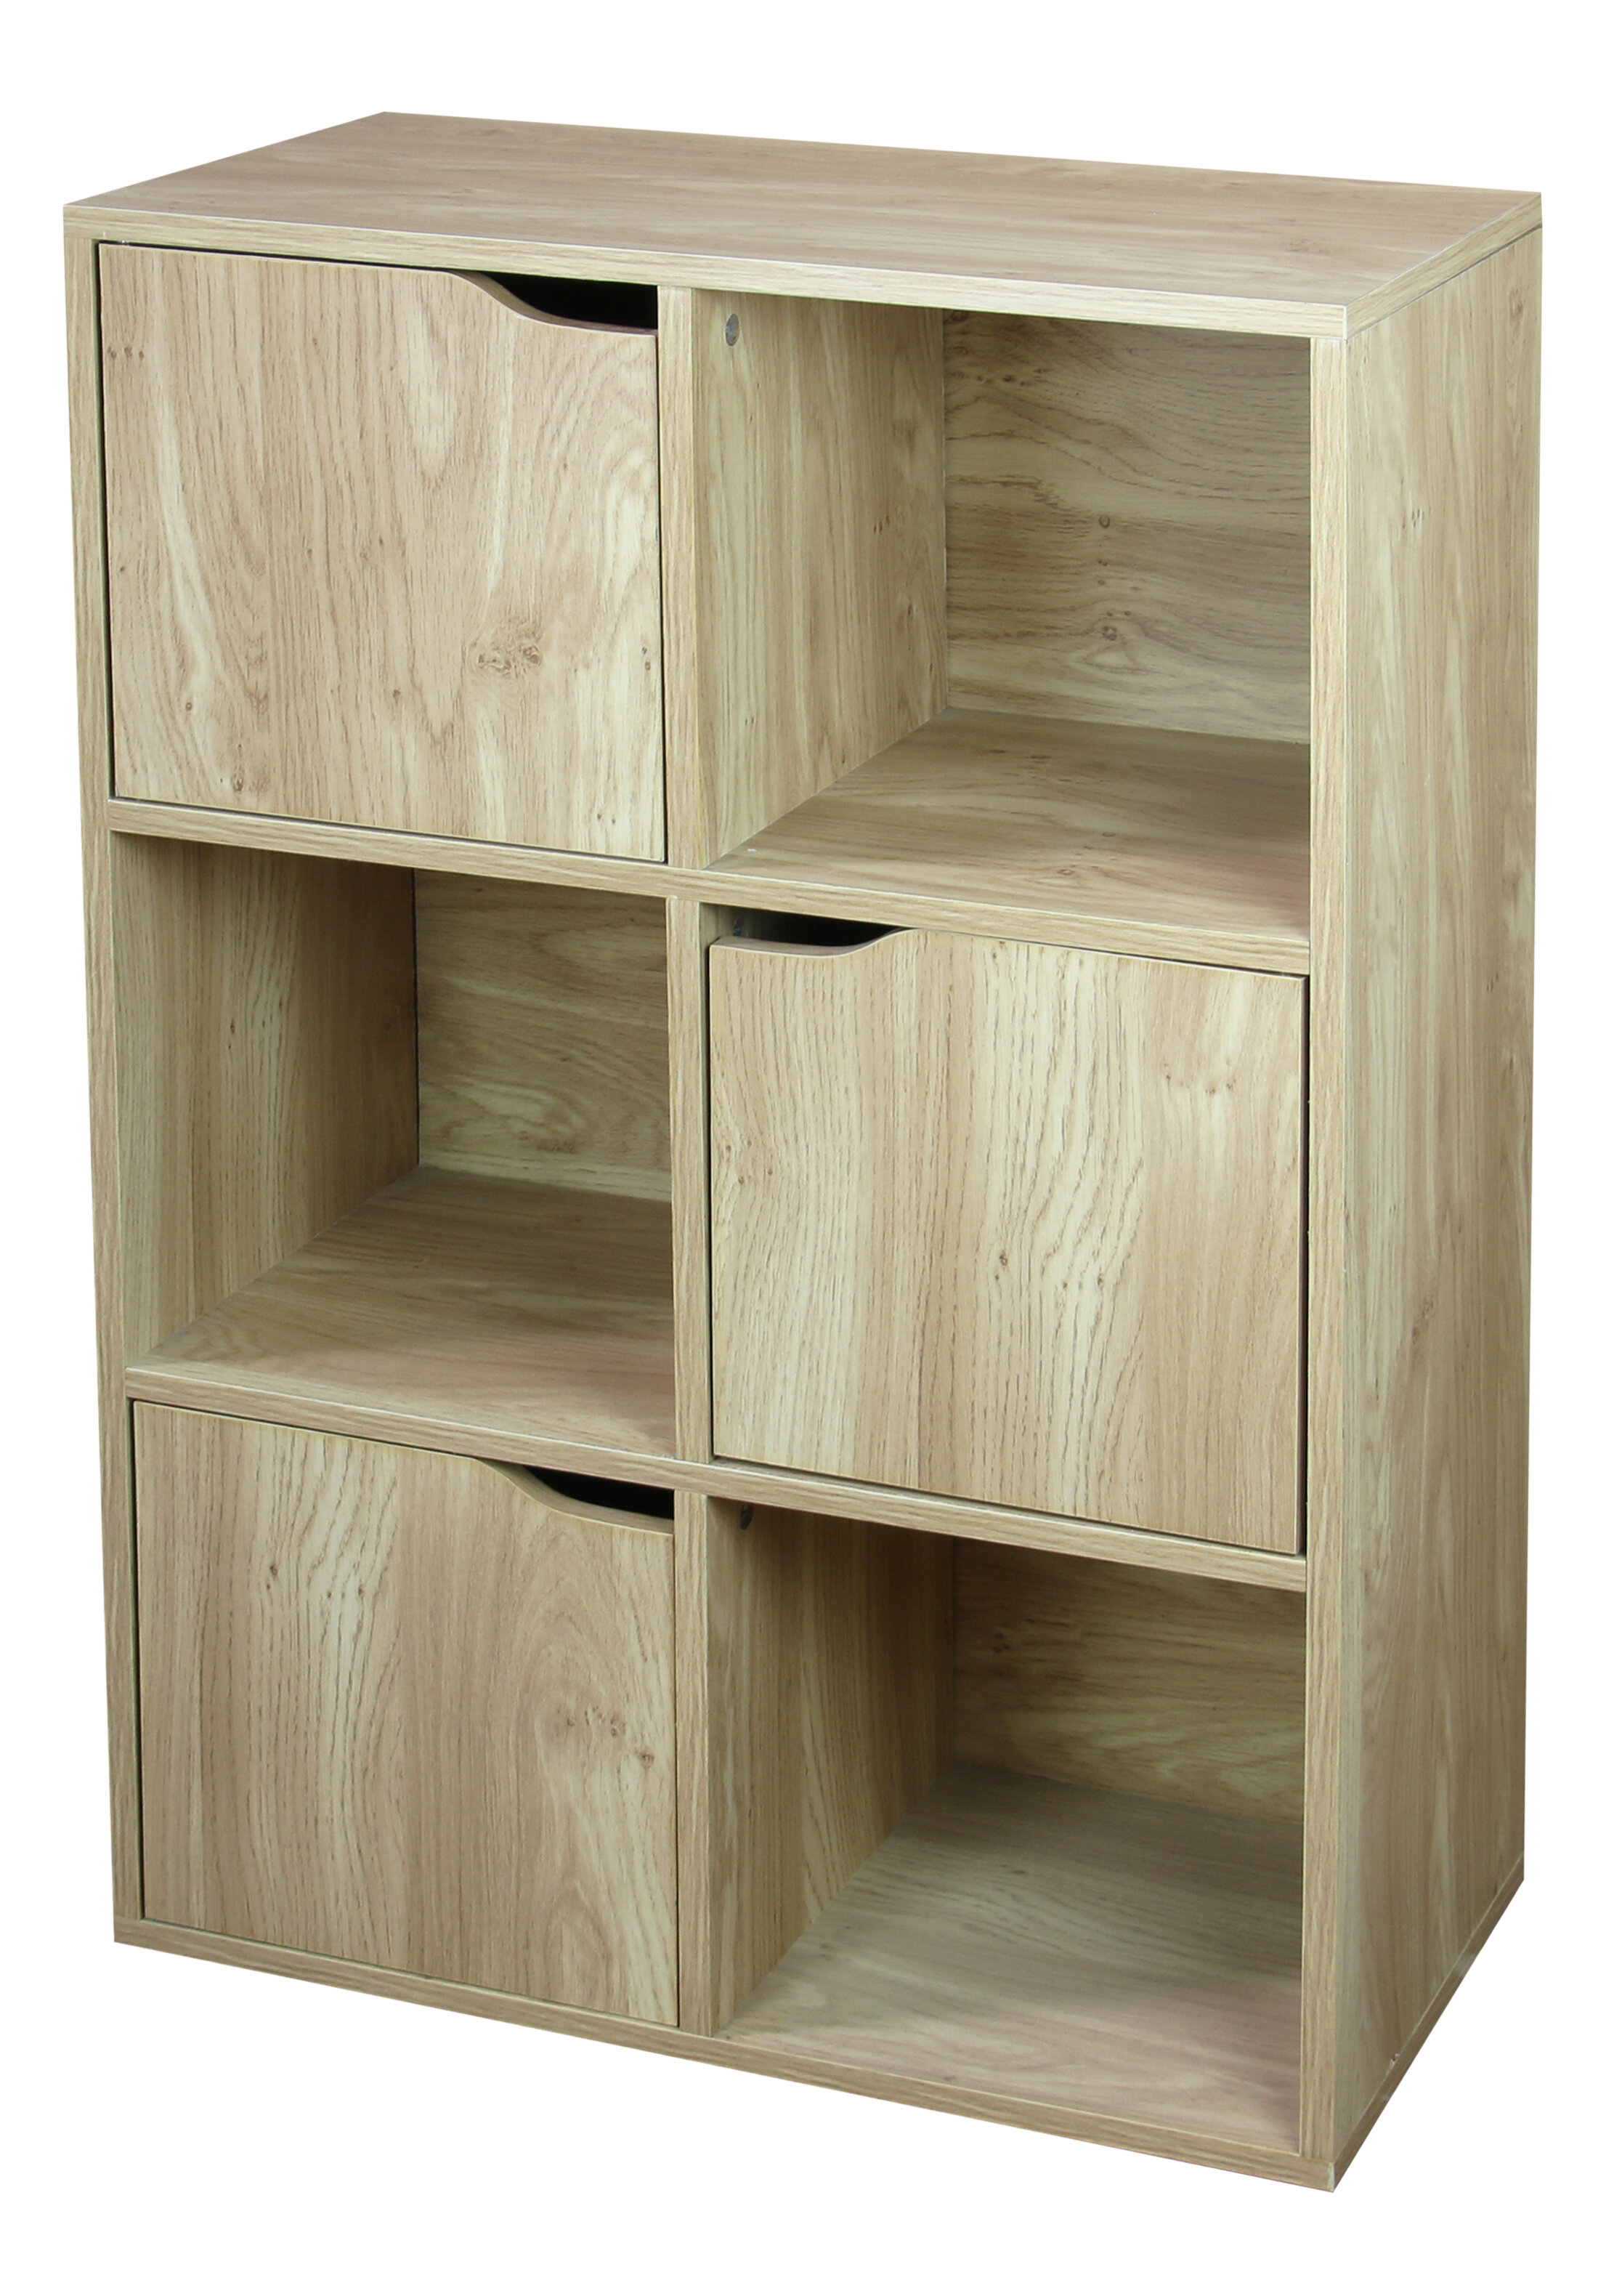 Ebern Designs Lamarr Wood Storage 6 Cube Bookcase Wayfair